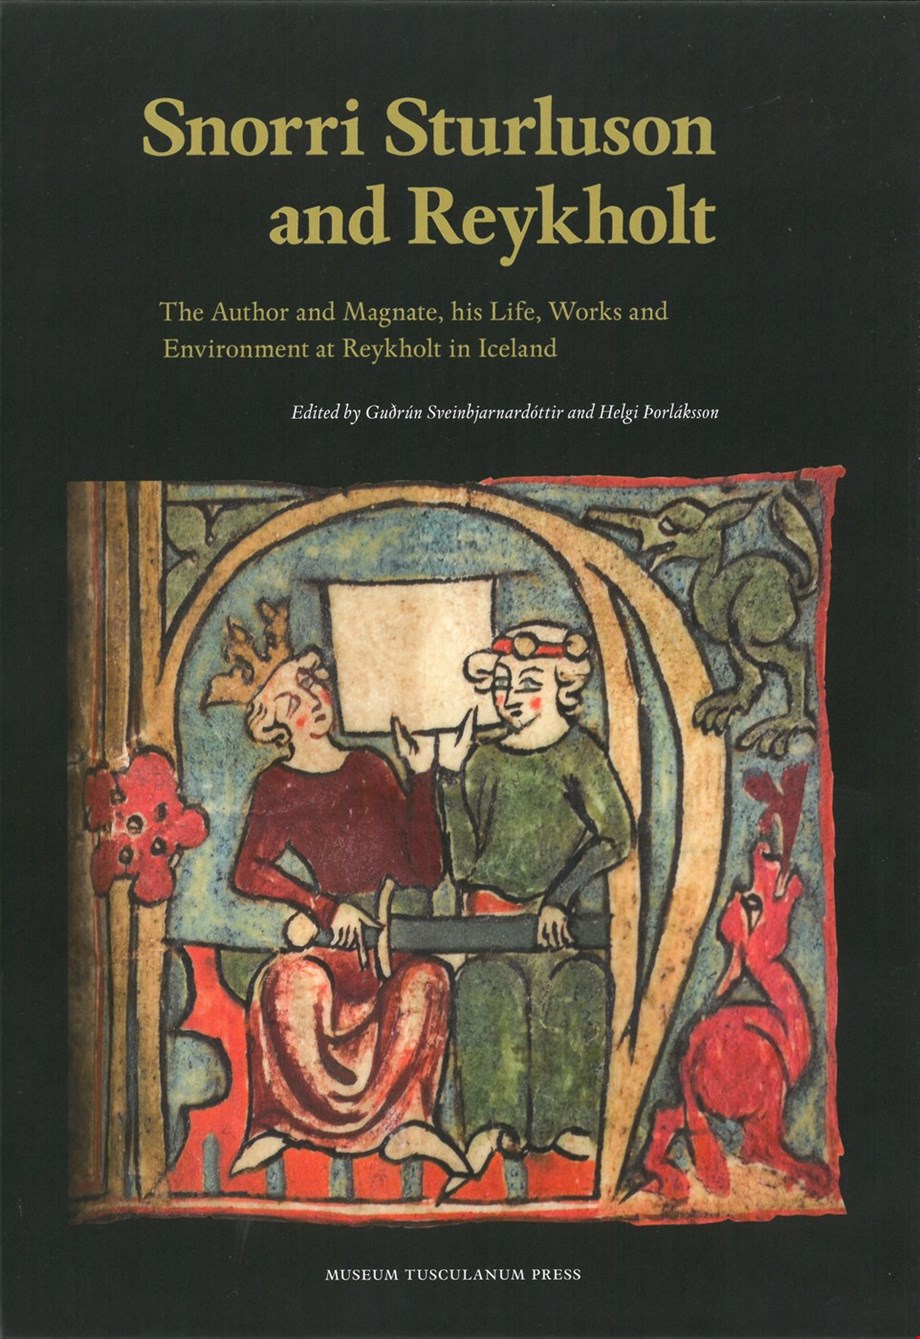 New book: Snorri Sturluson and Reykholt